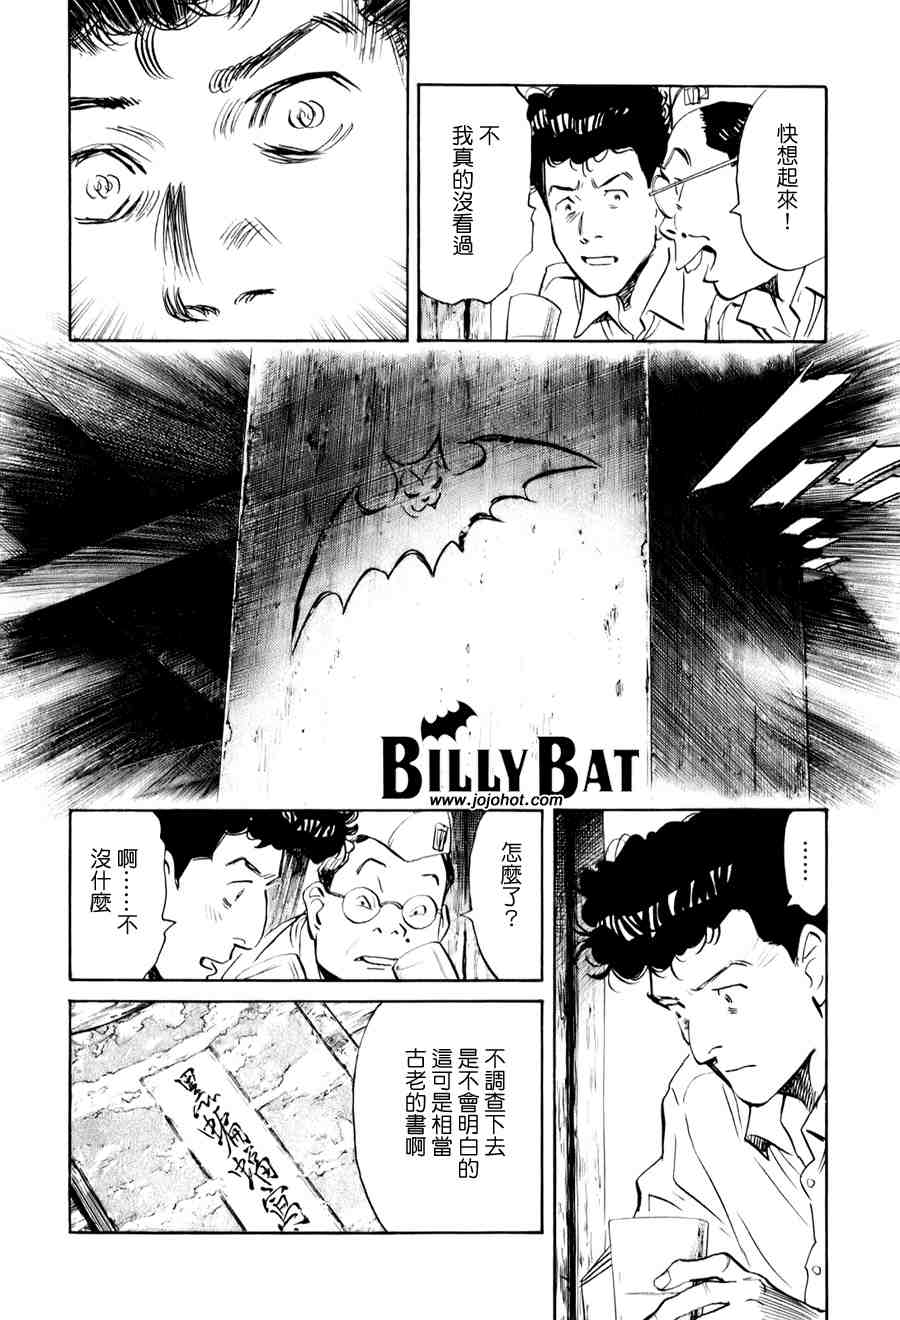 Billy_Bat - 第1卷(2/4) - 4